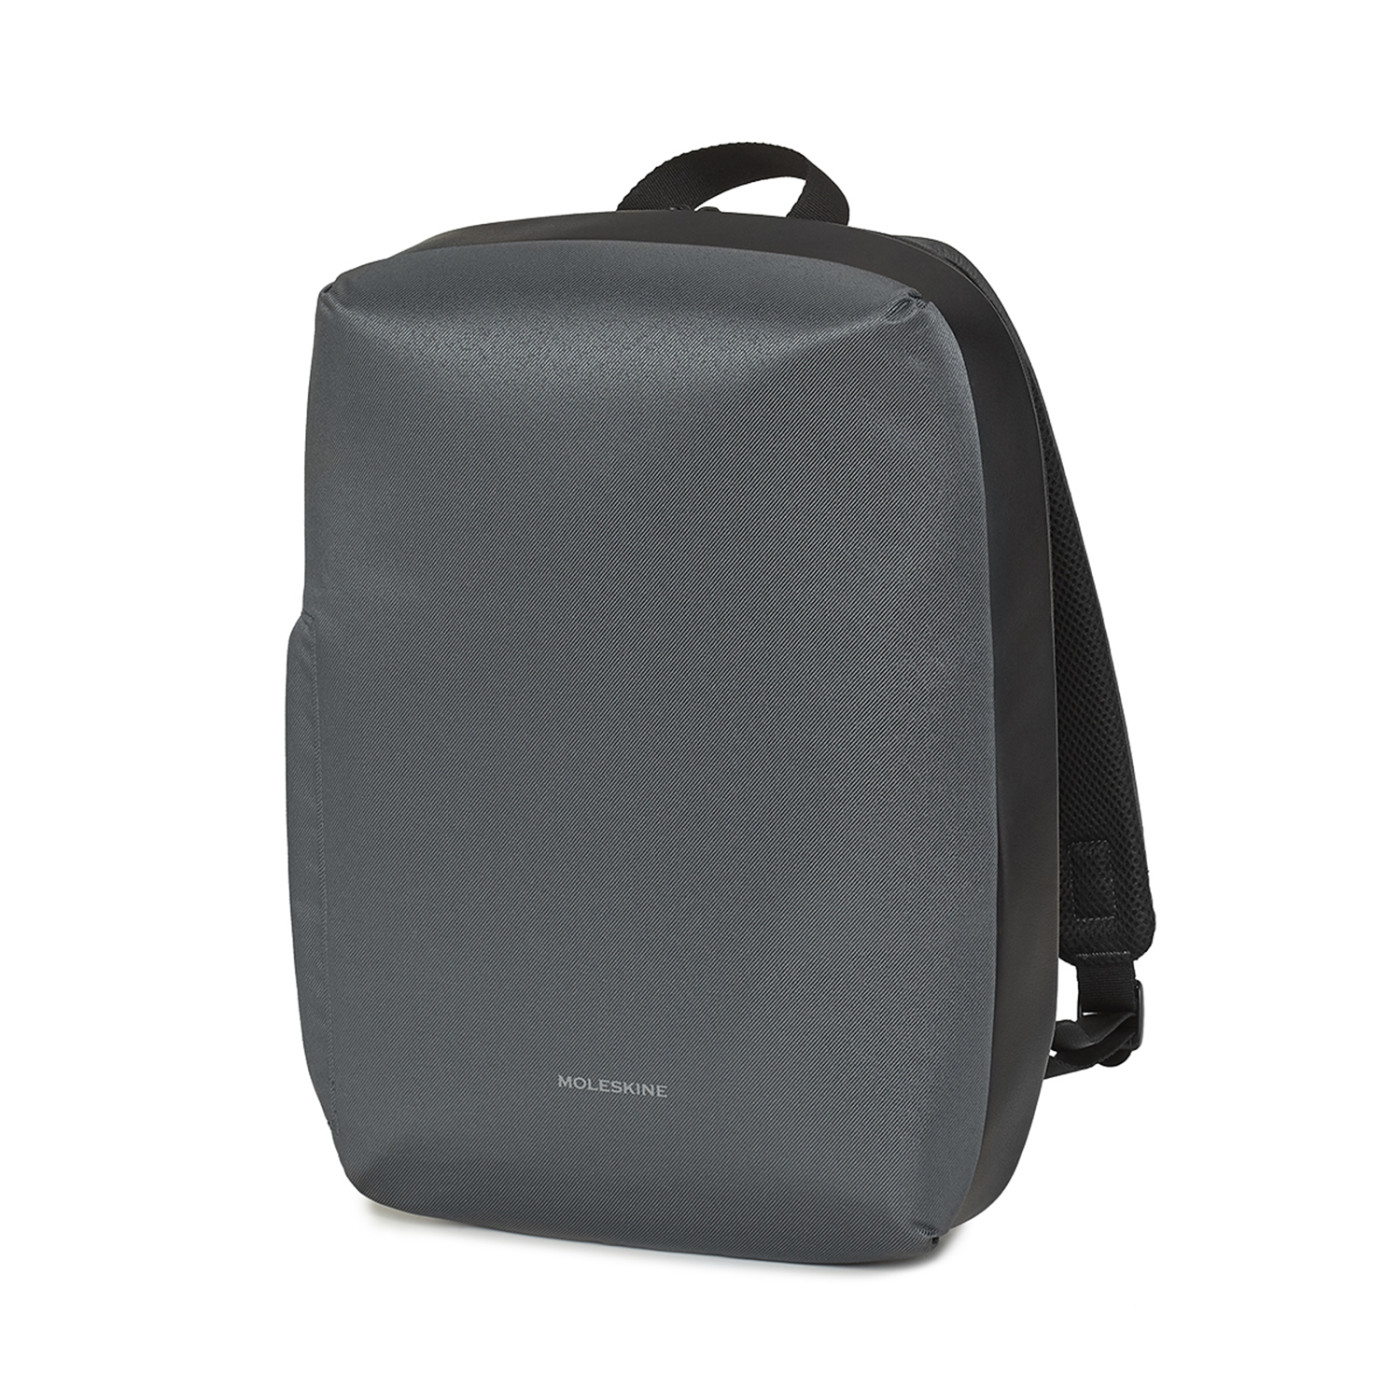 Moleskine 101823 - Notebook Backpack